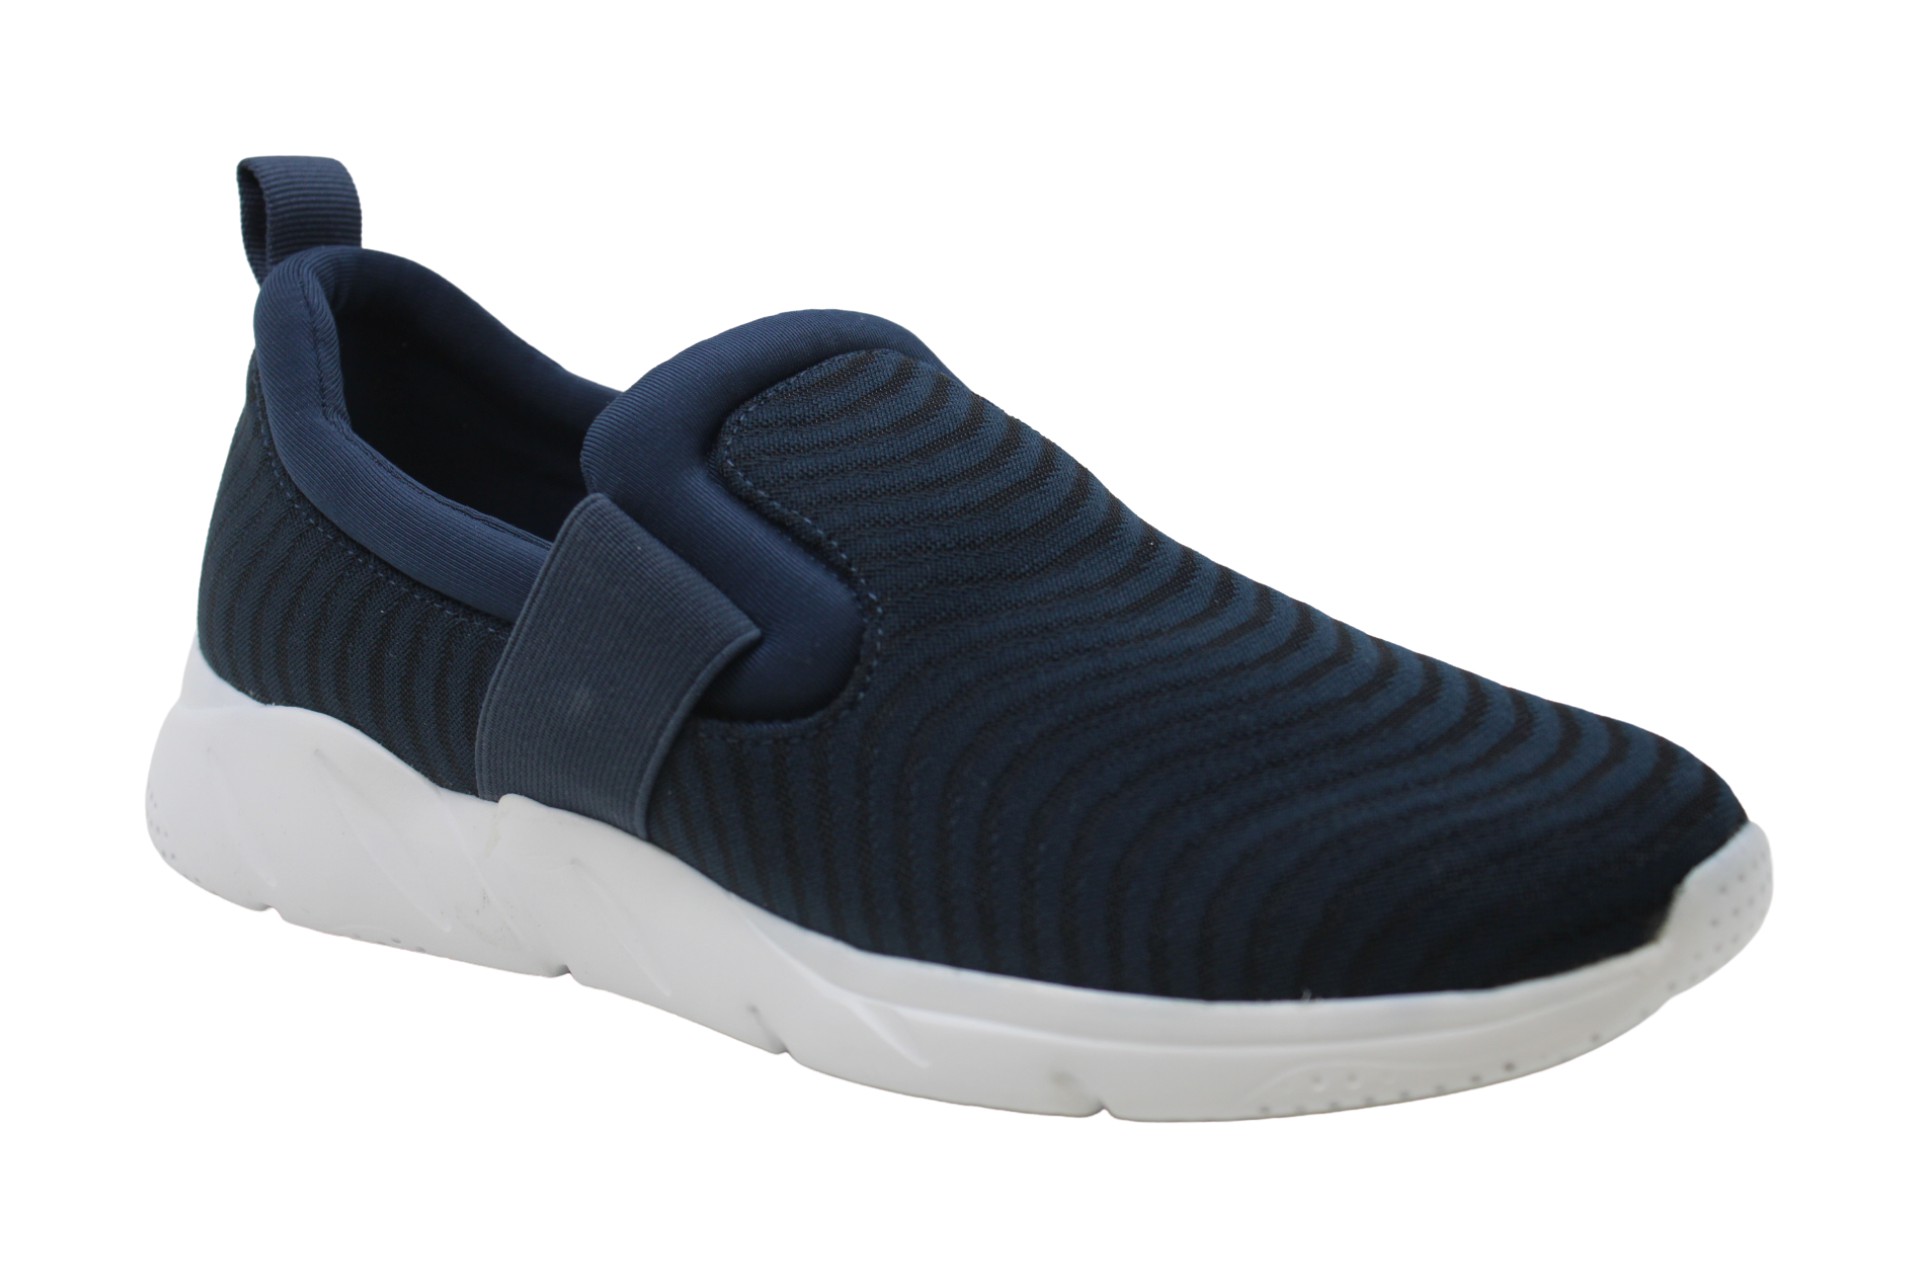 Ideology Womens Fashion Sneakers in Blue Color, Size 8.5 BTT | eBay